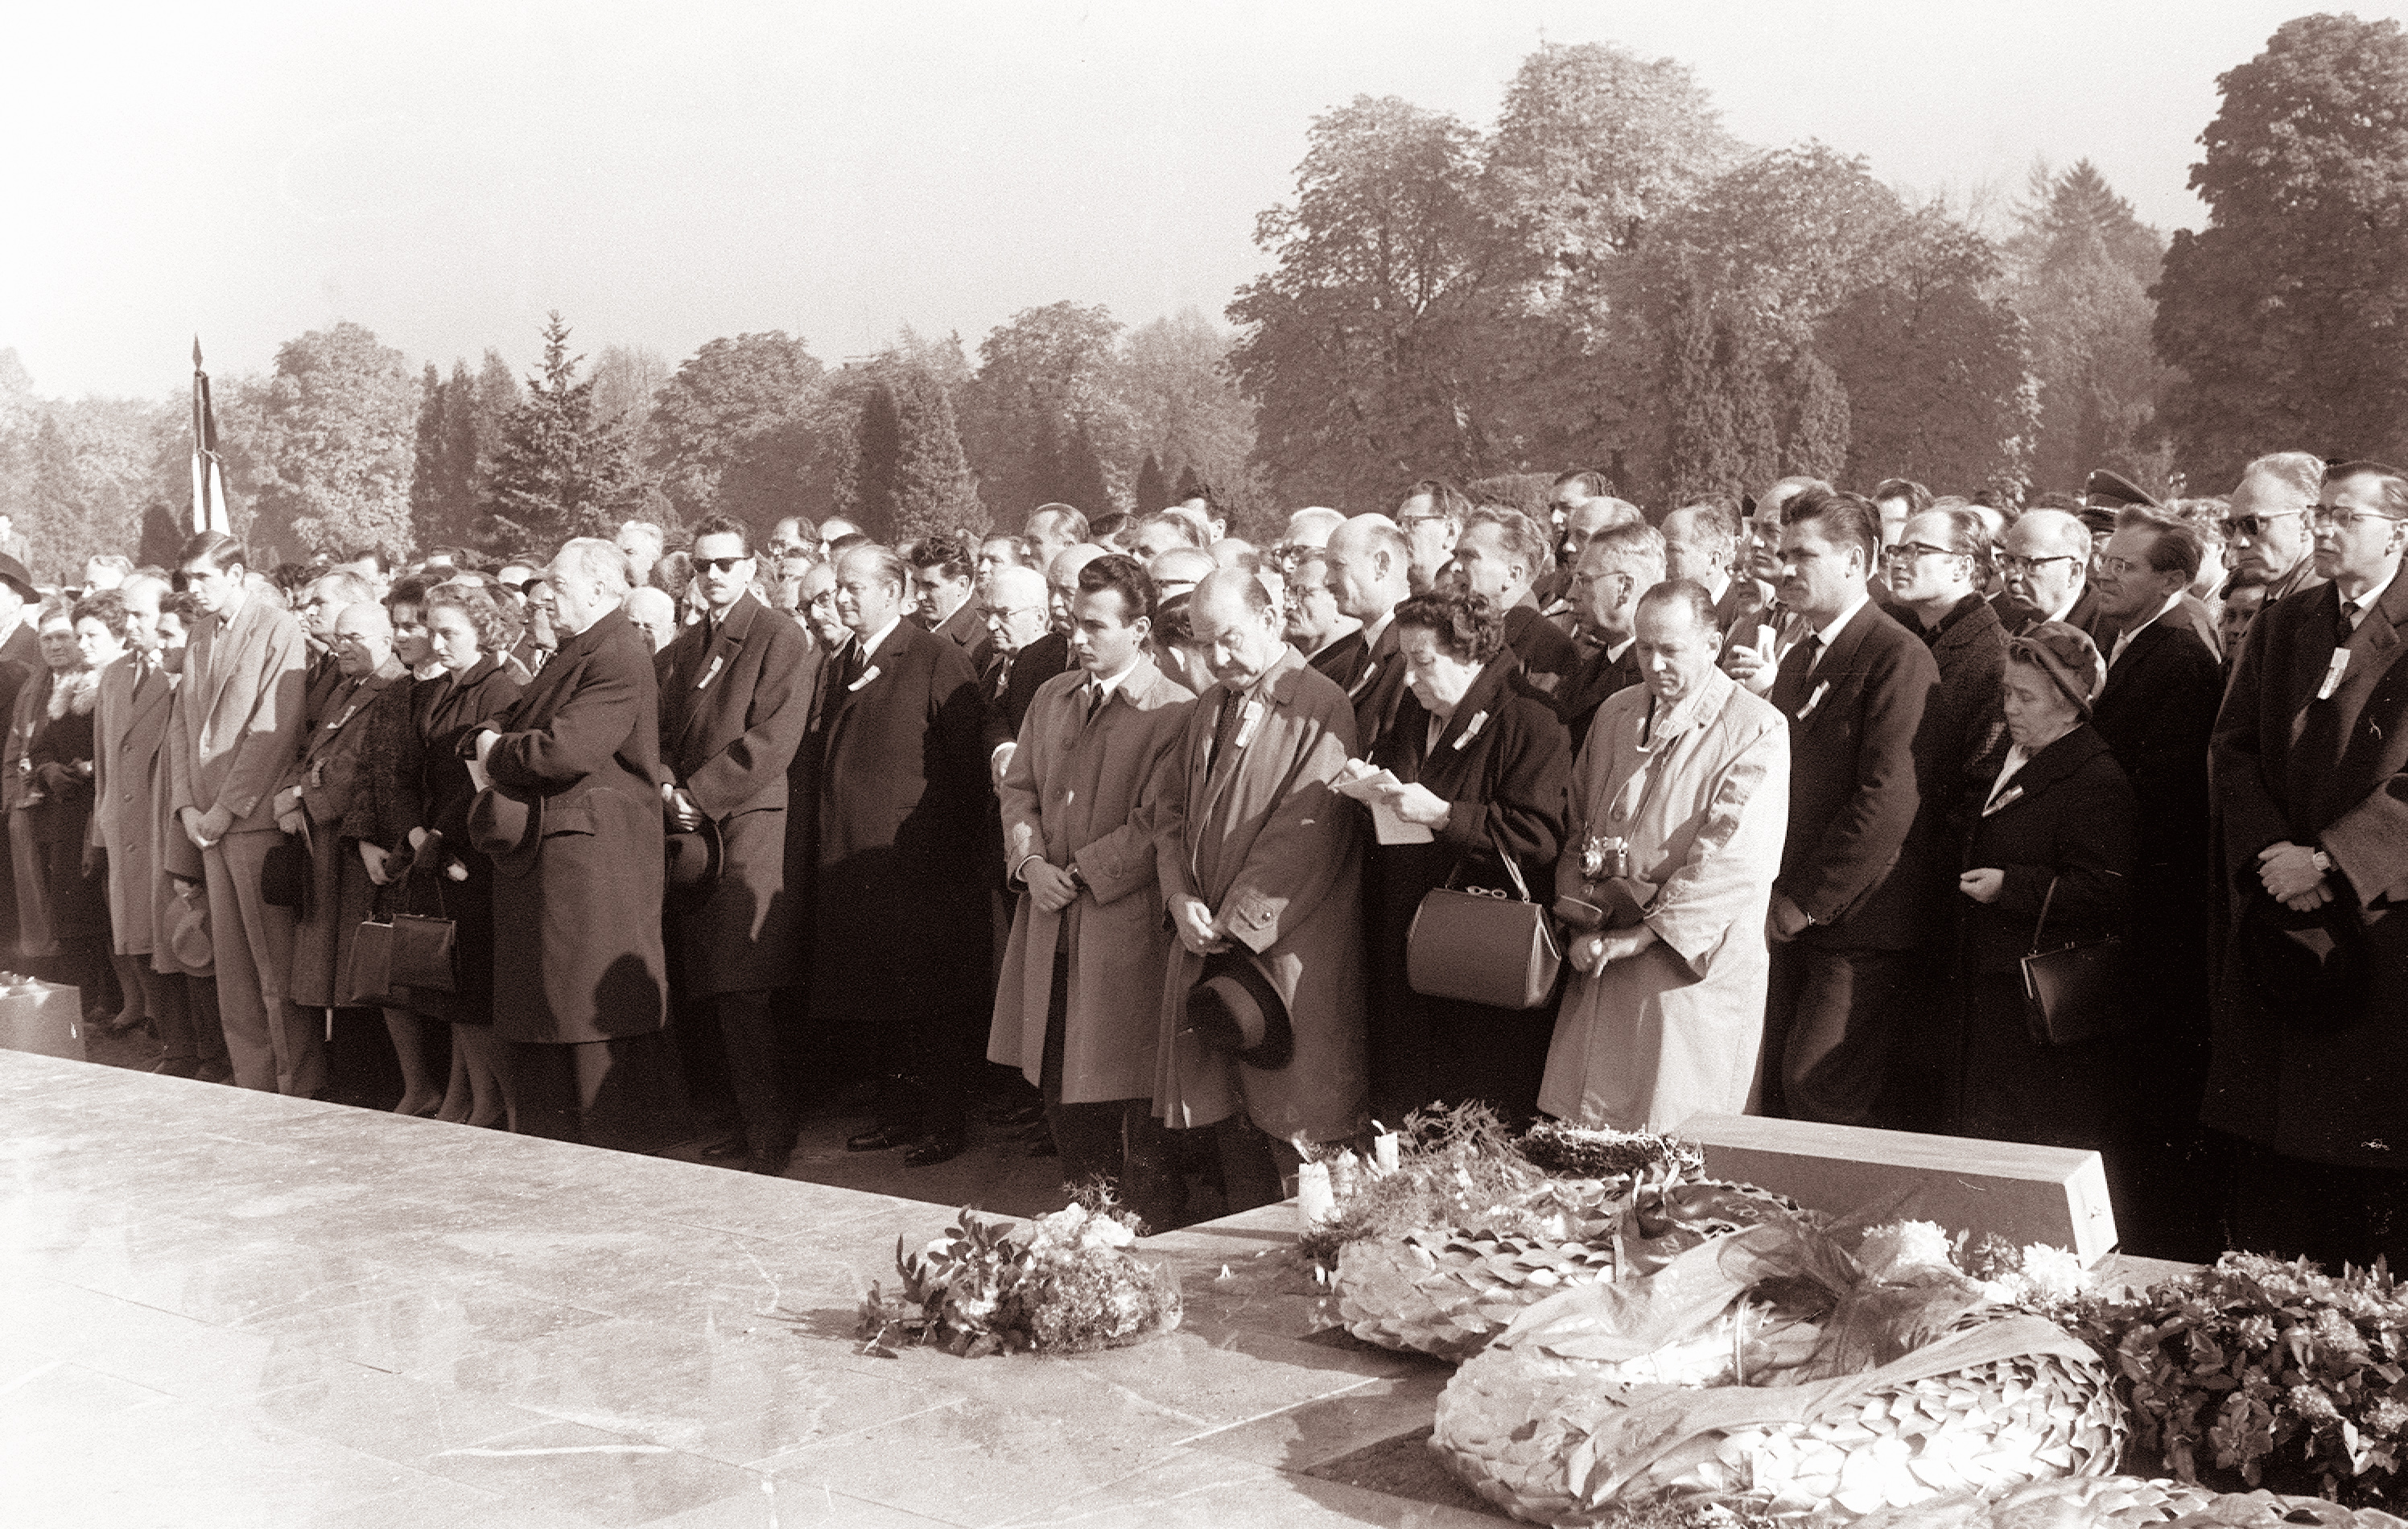 Odkritje spomenika žrtvam fašizma v Gradcu 1961 (12)